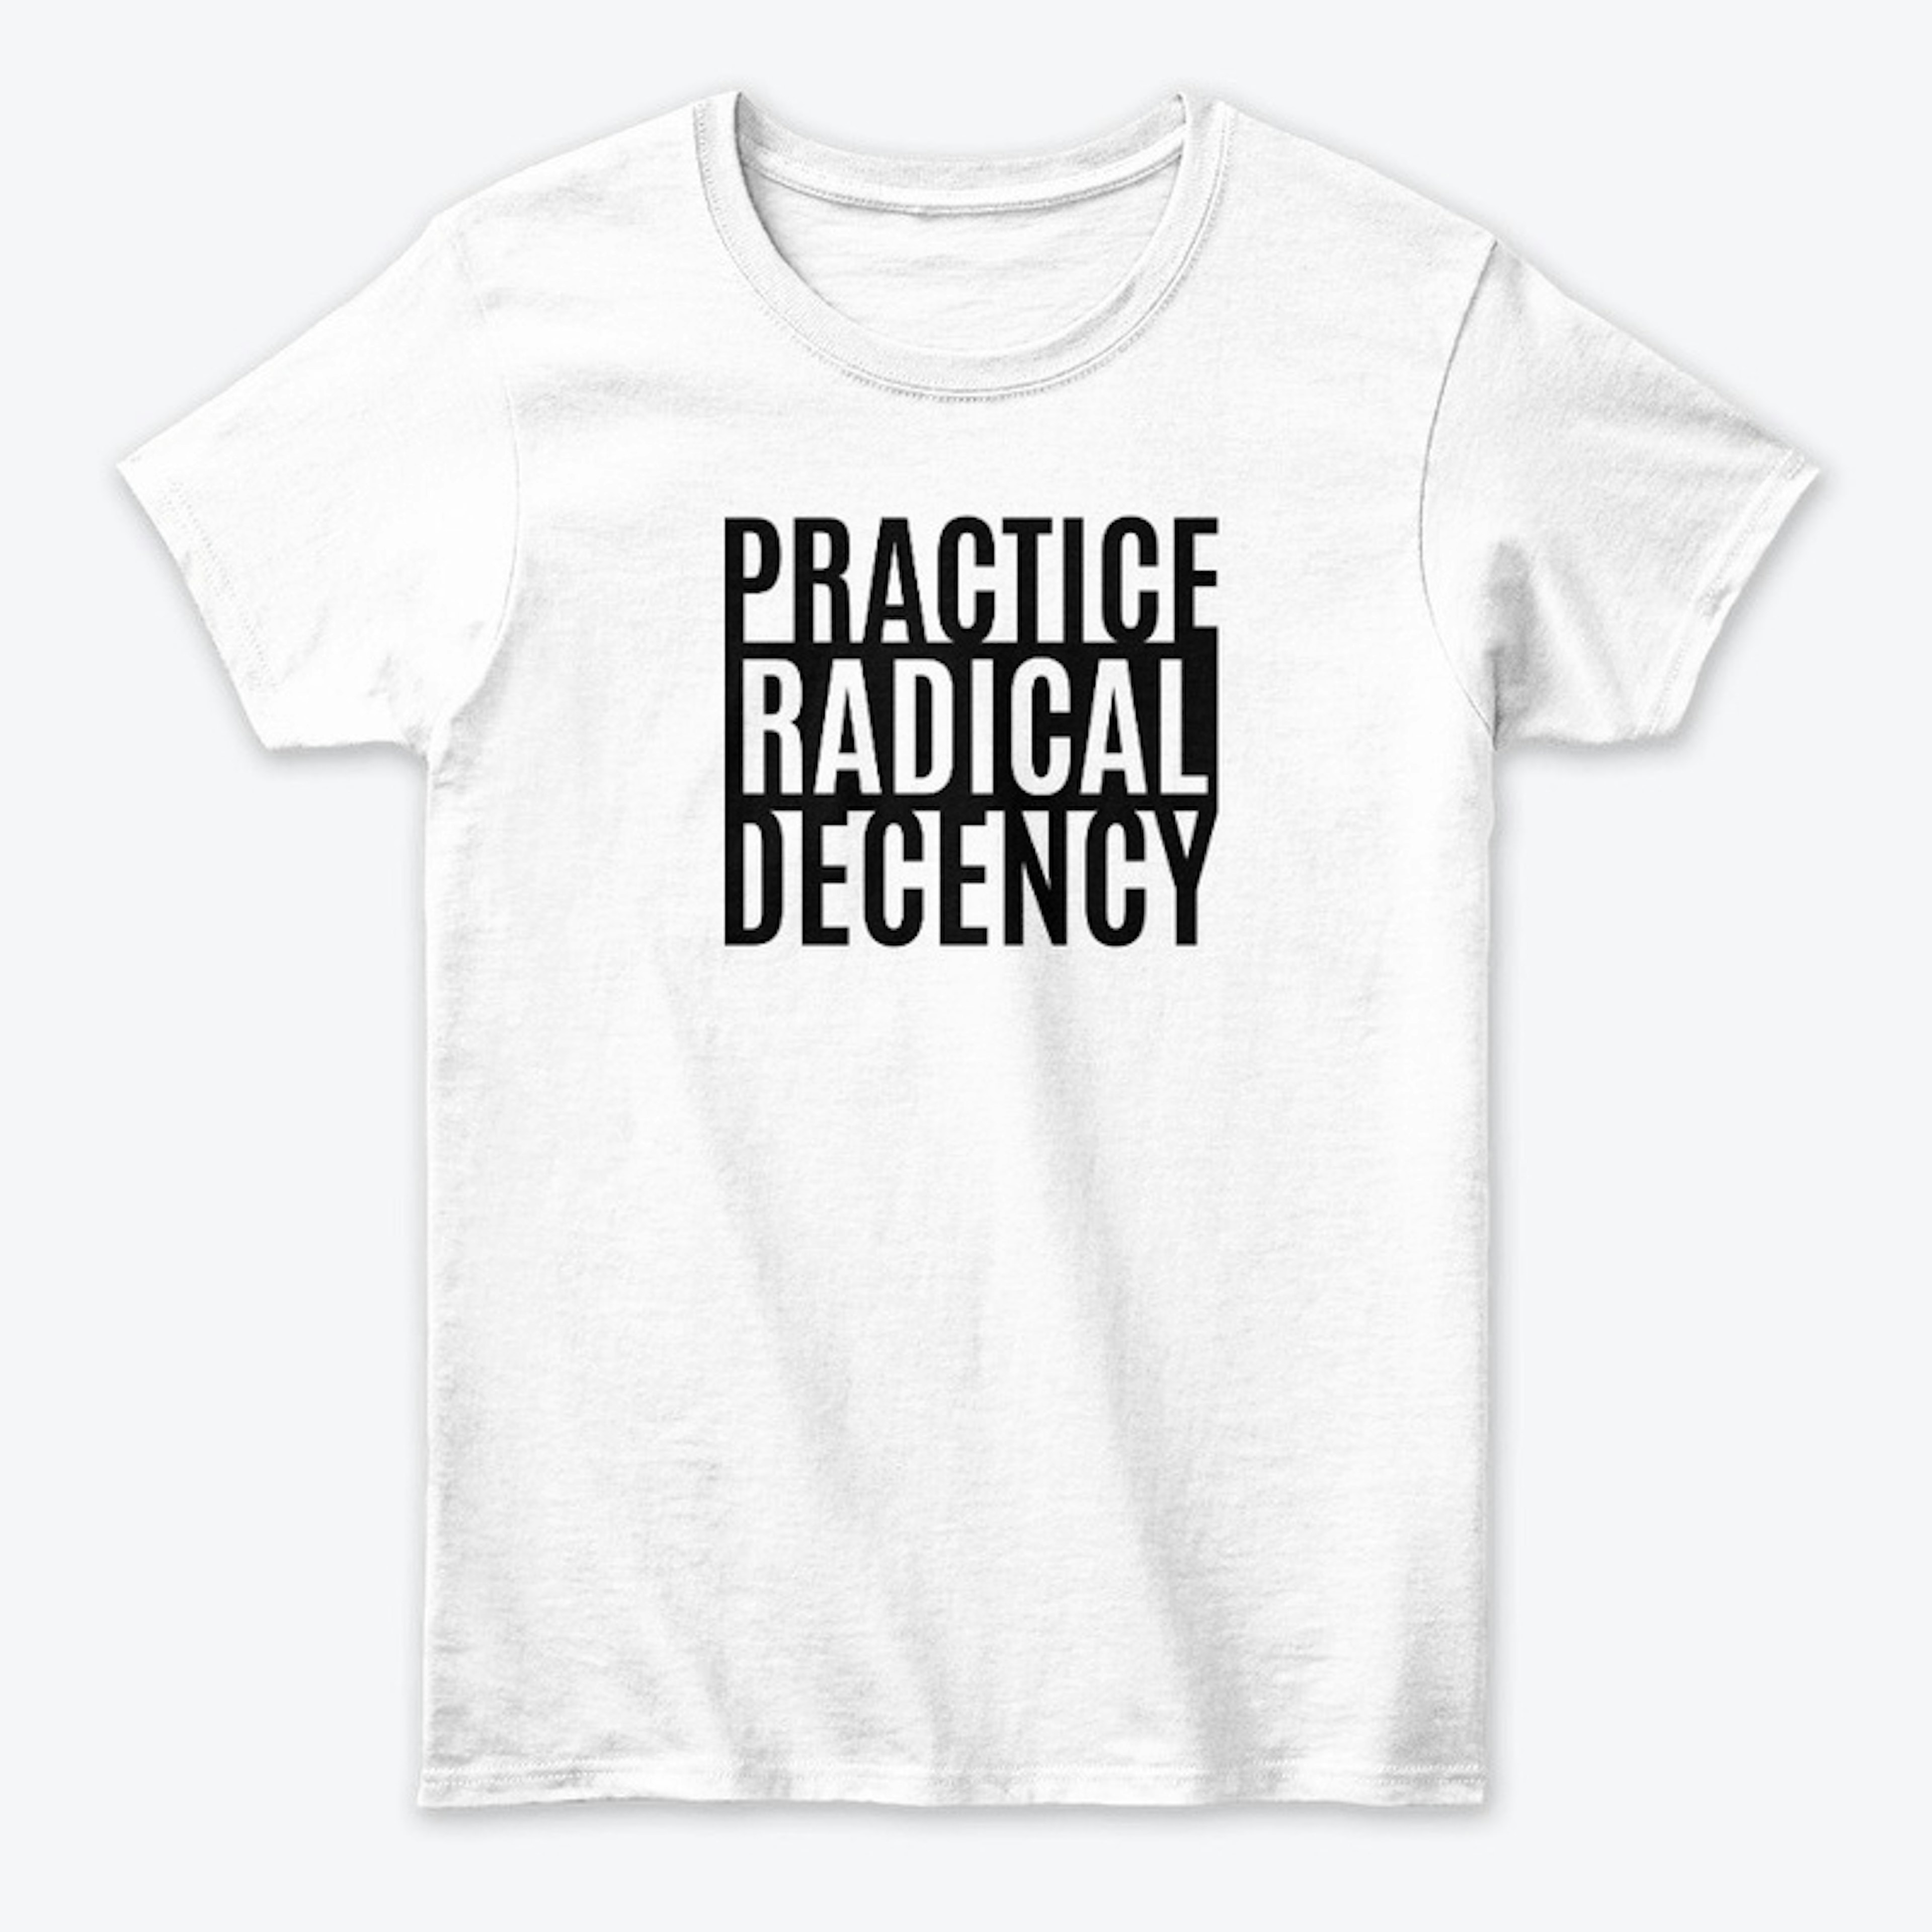 Practice Radical Decency